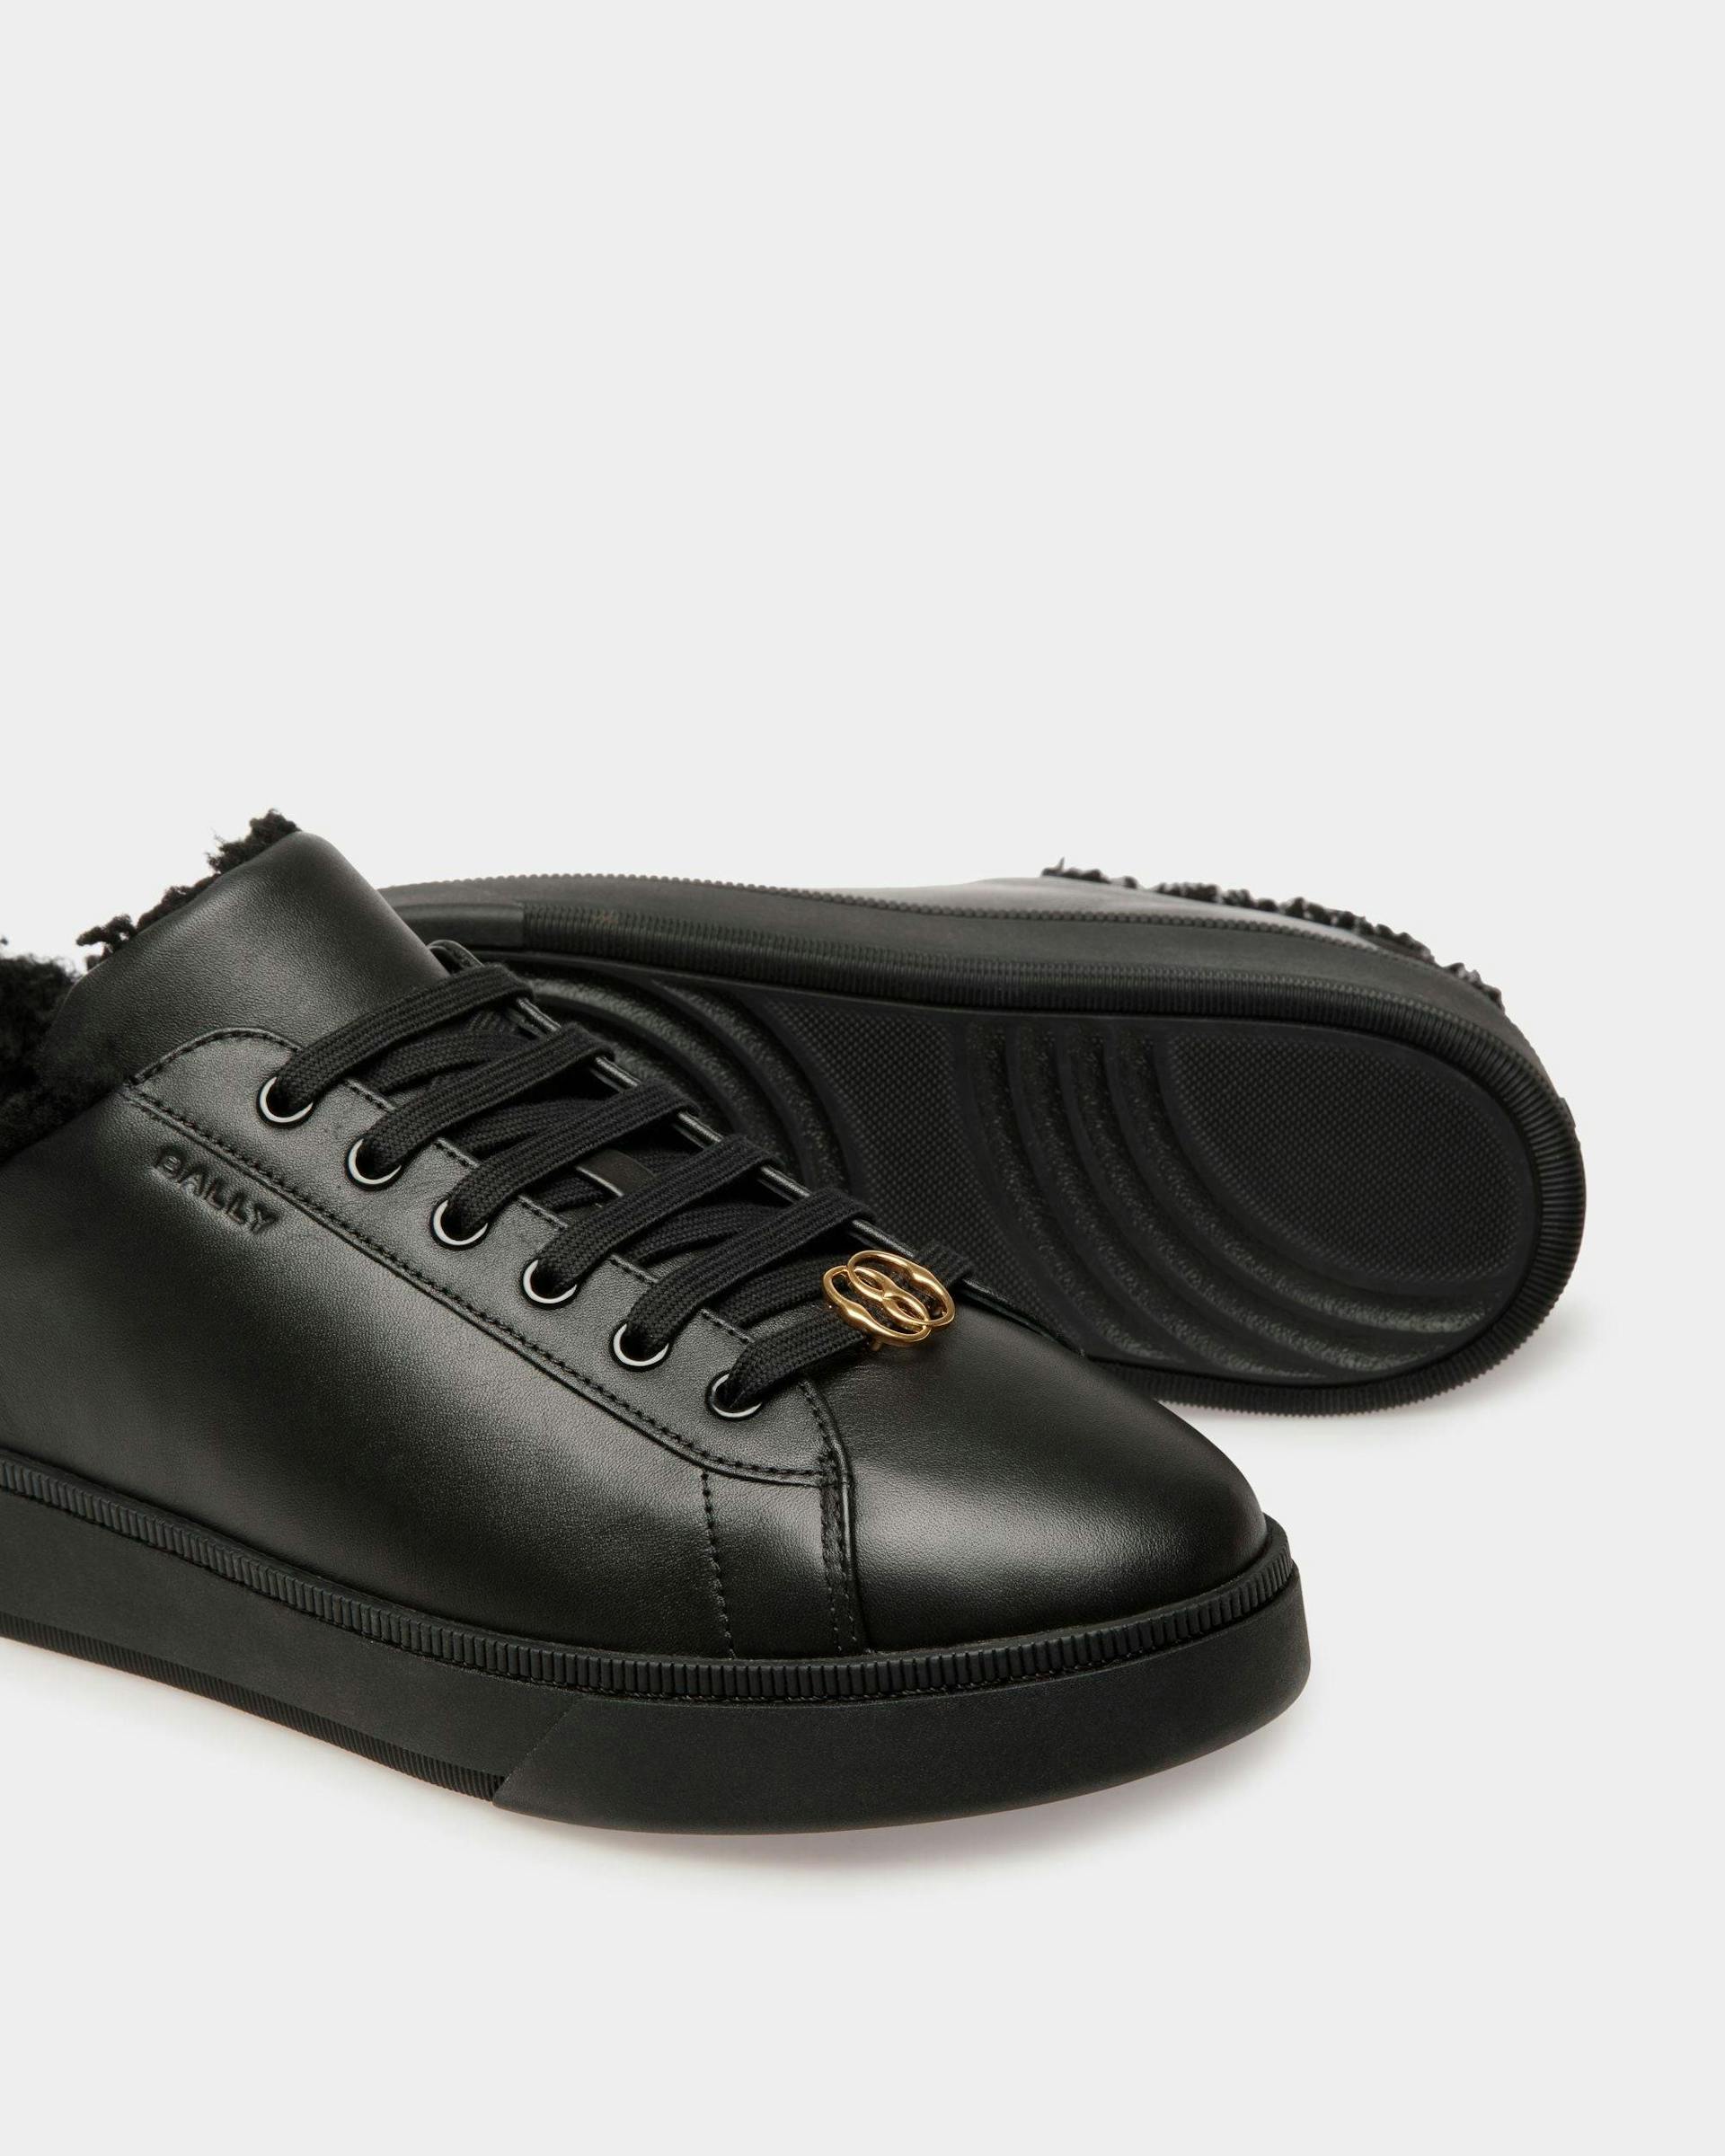 Men's Raise Sneakers In Black Leather | Bally | Still Life Detail